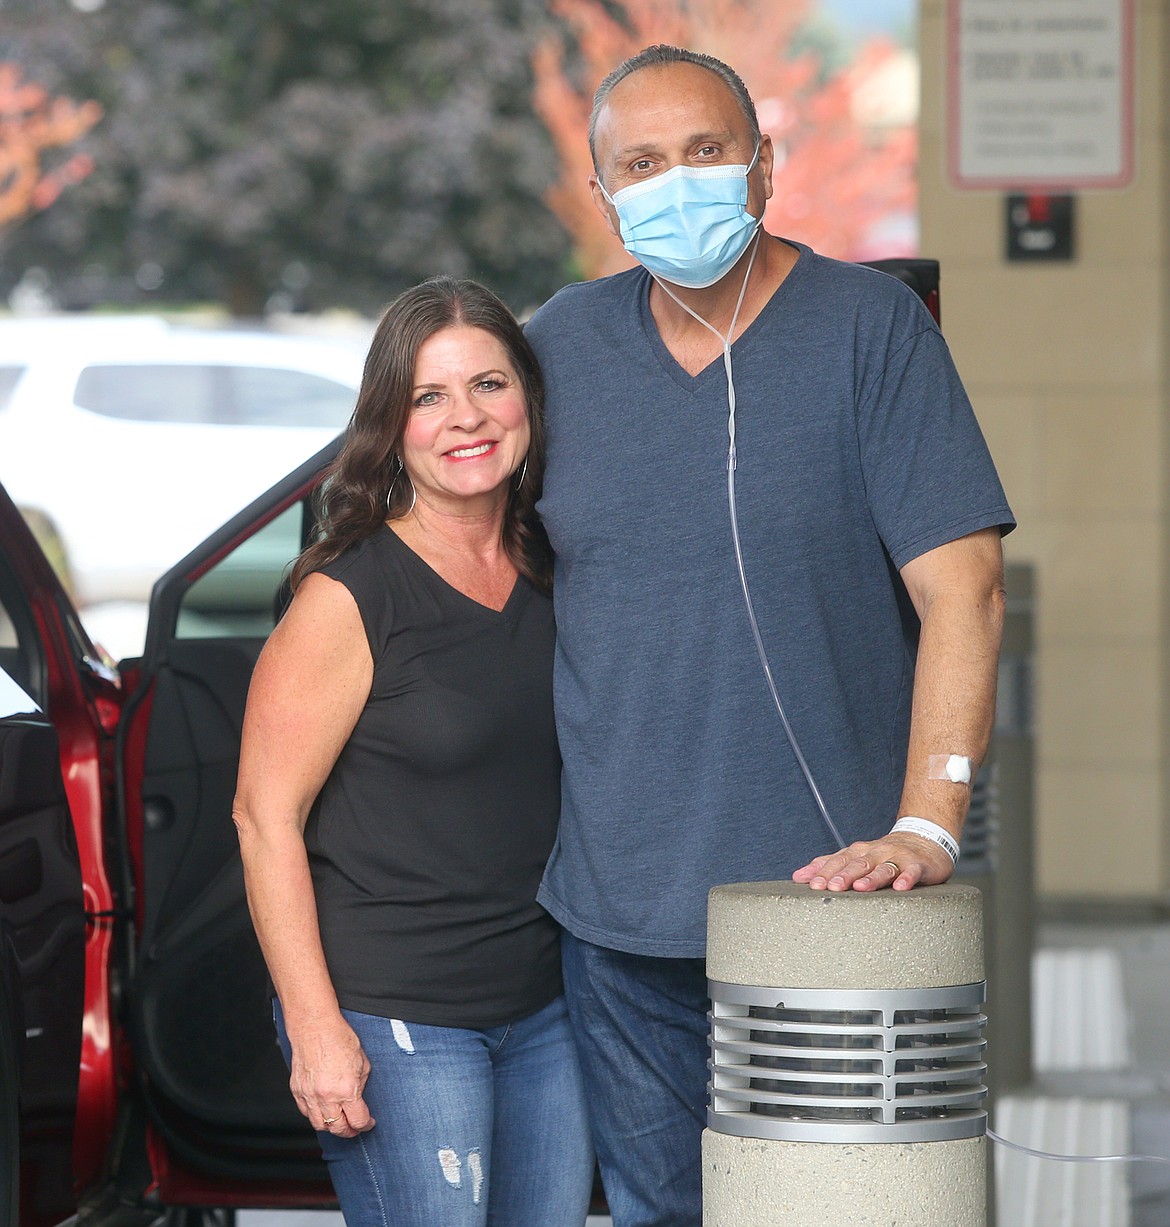 Pastor Paul Van Noy and wife Brenda pose together outside Kootenai Health on Monday.